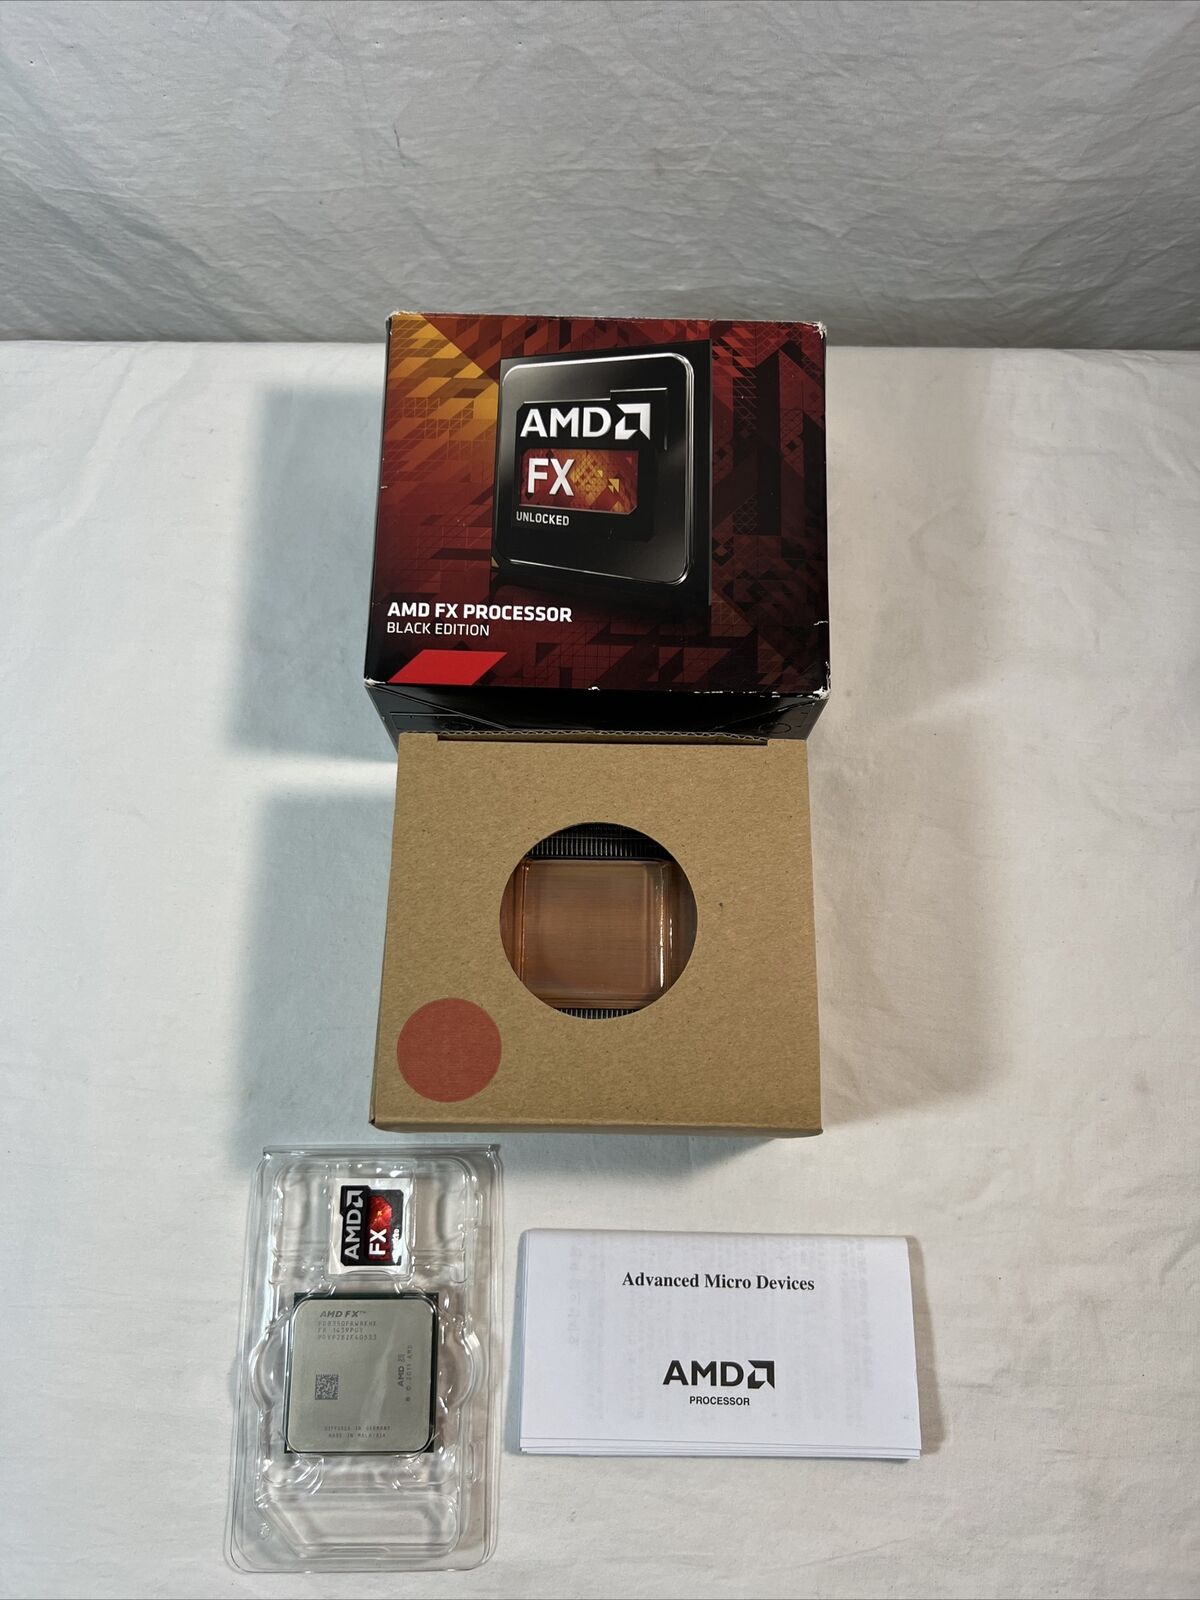 (NEW) AMD FX-8350 | Black Edition (FD8350FRW8KHK) 4GHz AM3+ 8-Core Processor CPU